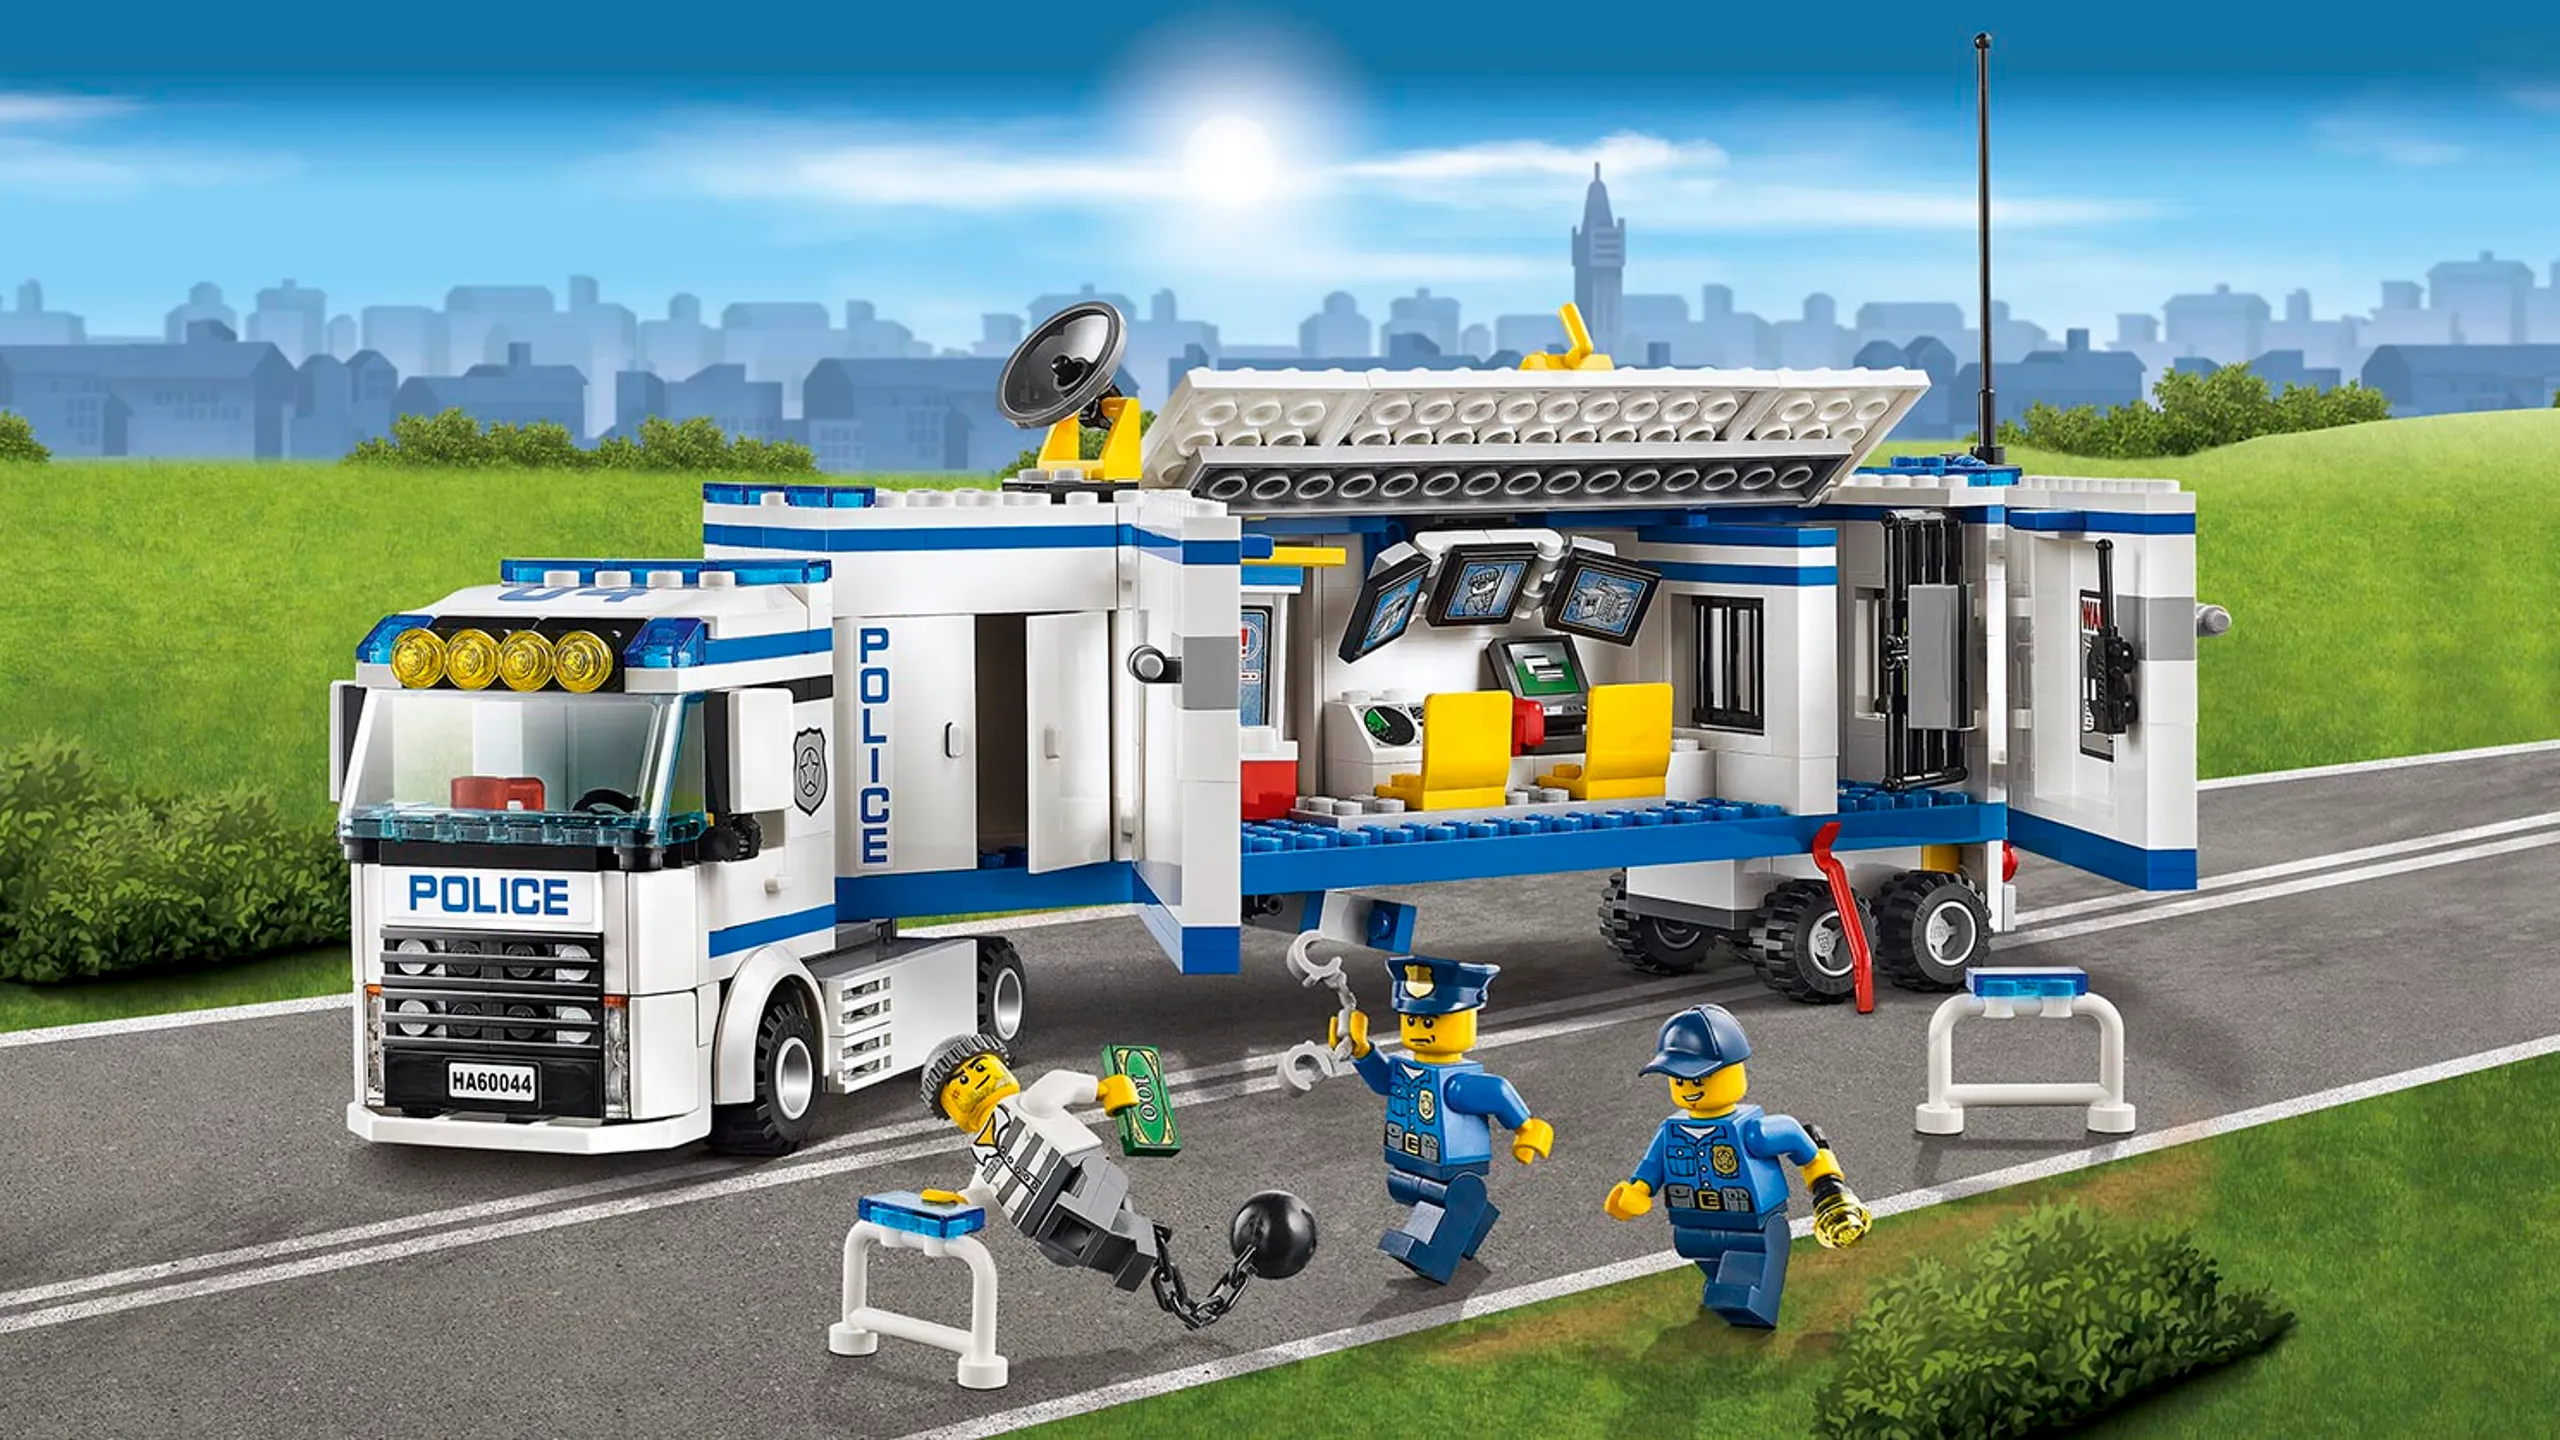 LEGO City Demolition Service Truck